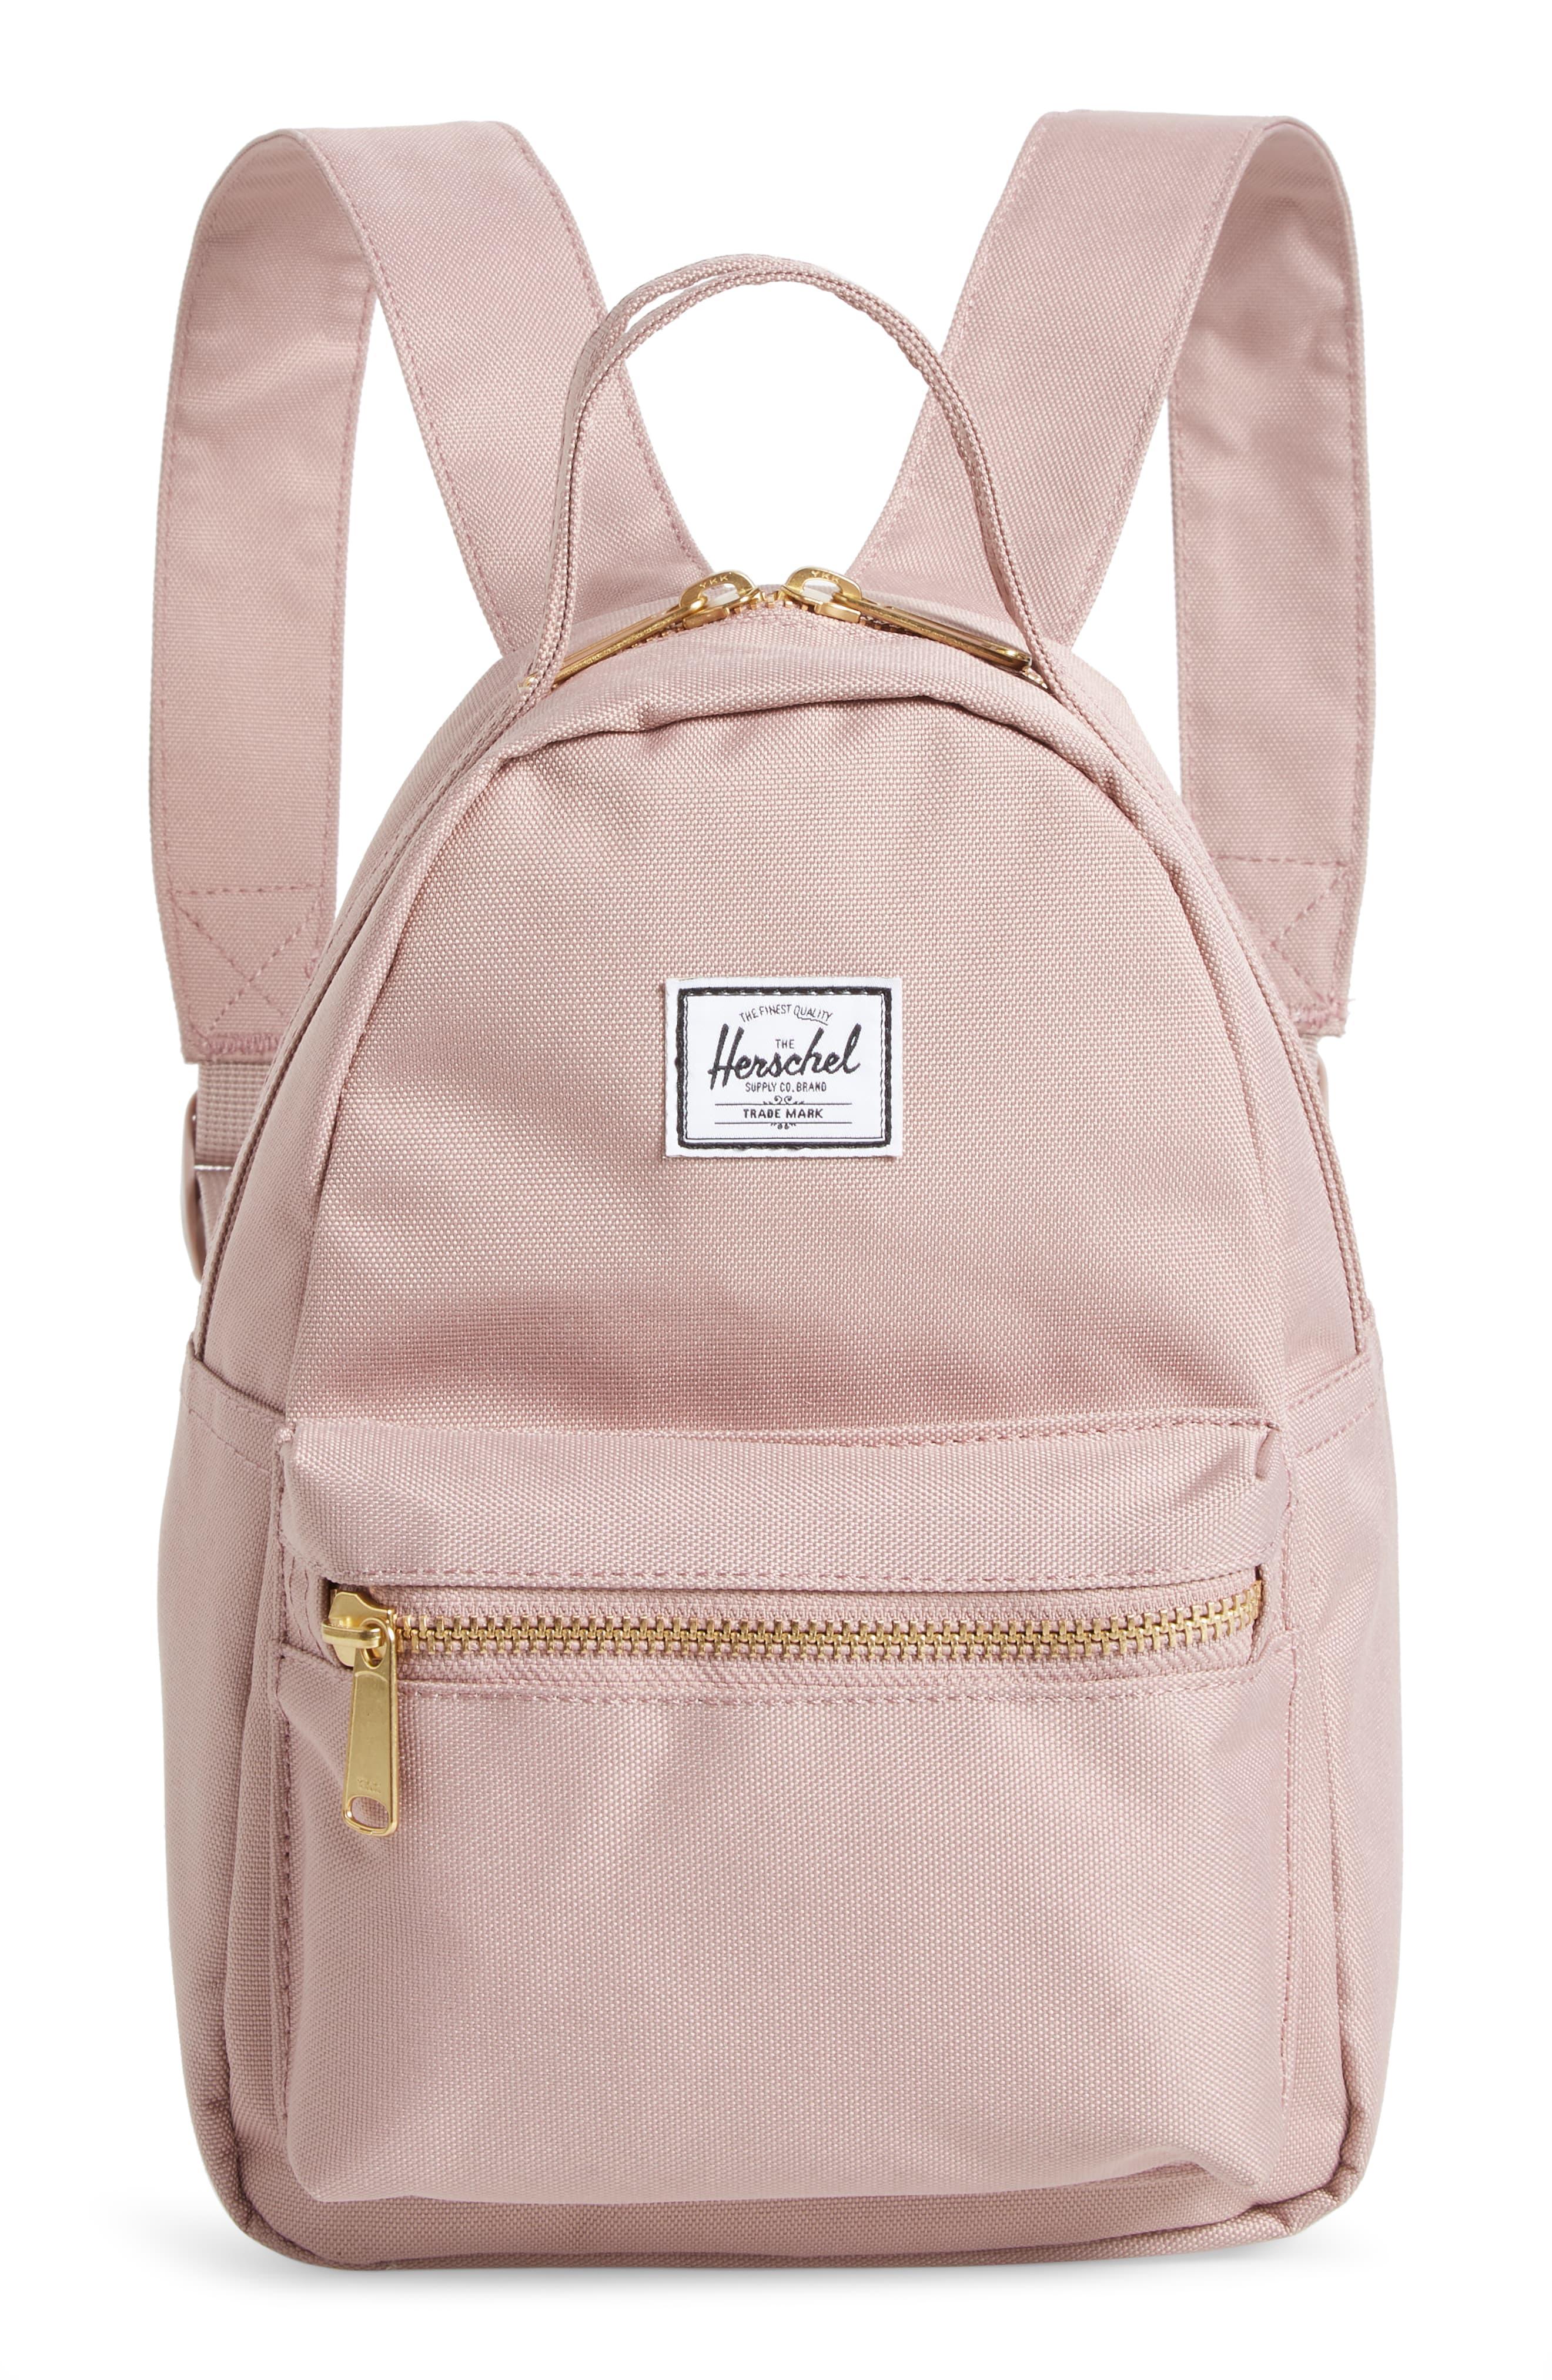 Herschel Supply Co. Mini Nova Backpack in Pink - Save 18% - Lyst